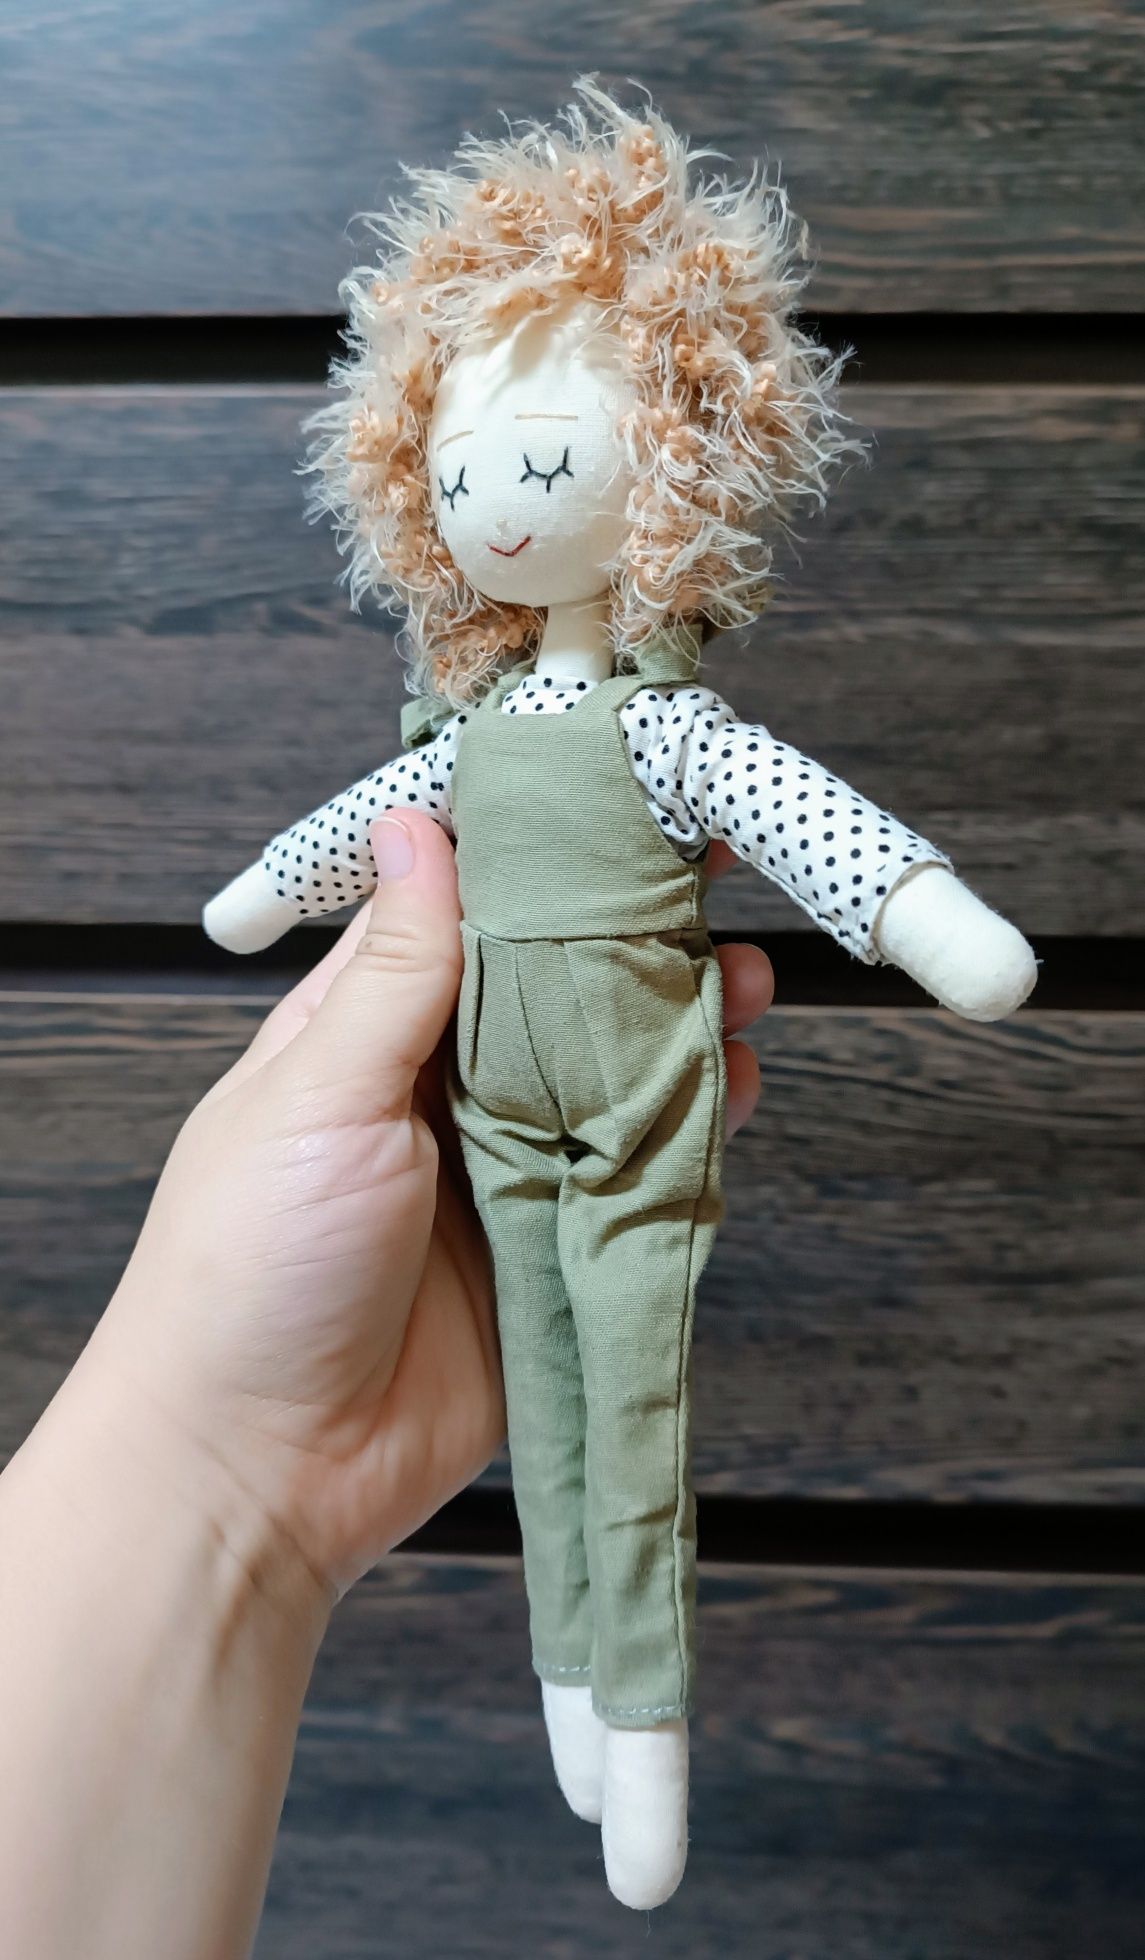 Мягкая кукла Lerusha Dolls, текстильная куколка, тильда